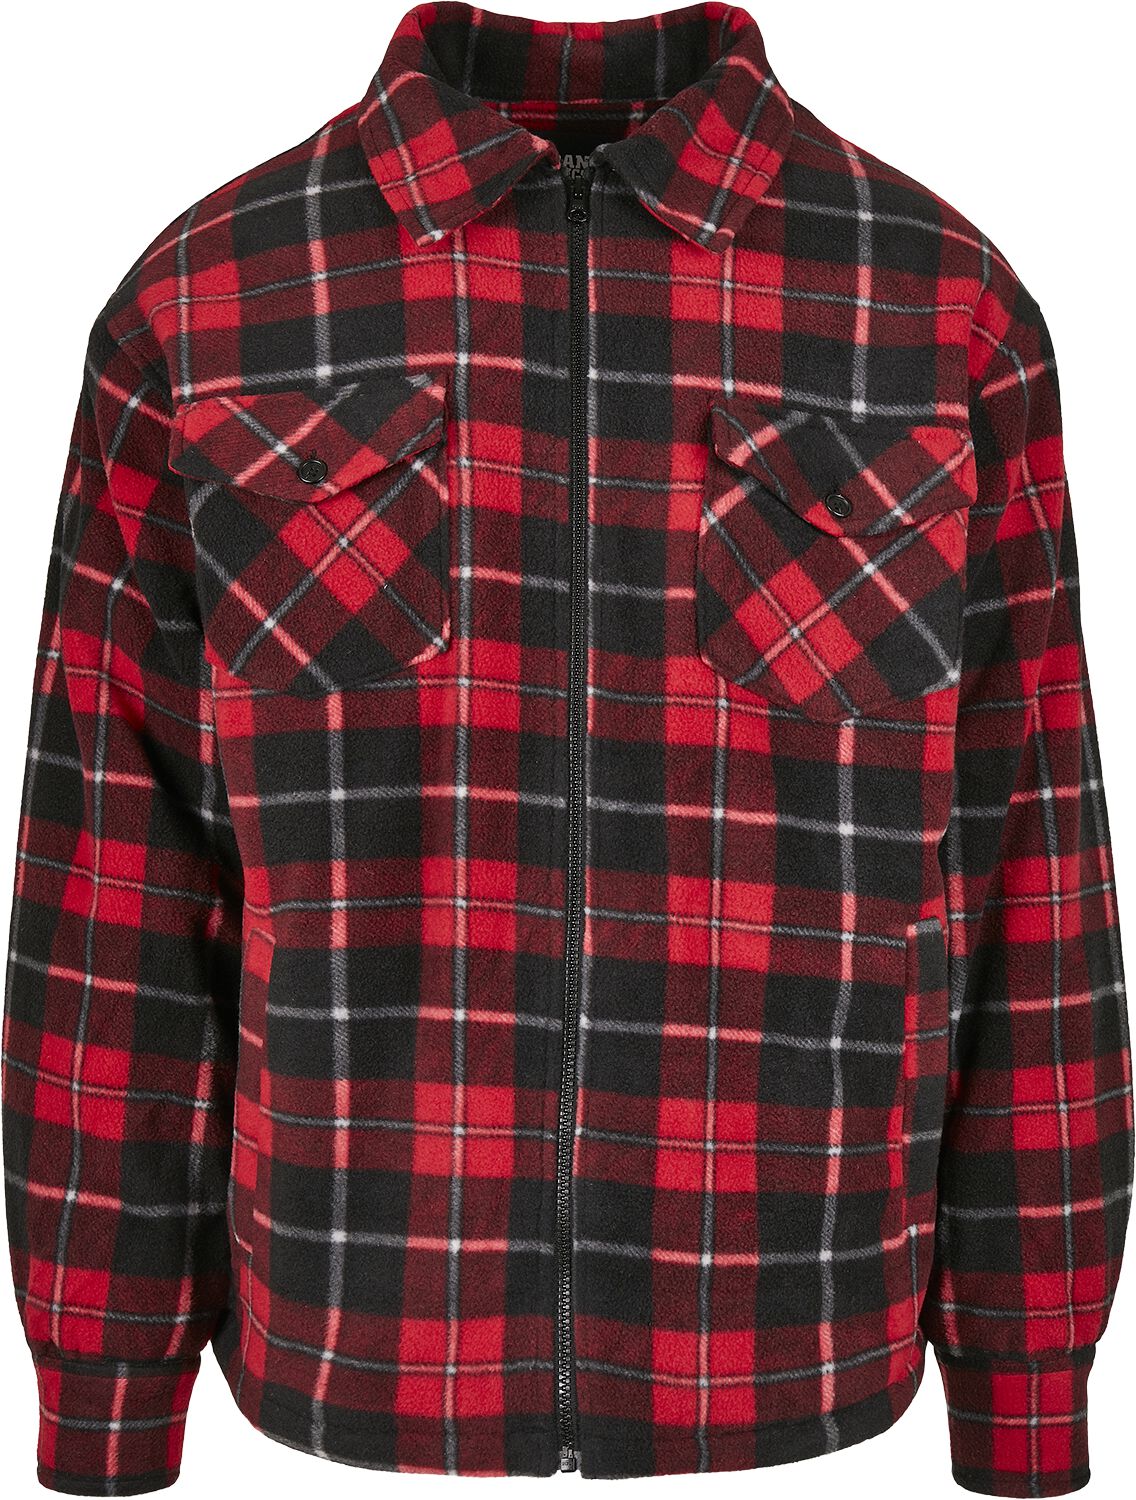 Urban Classics Plaid Teddy Lined Shirt Jacket Between-seasons Jacket black red